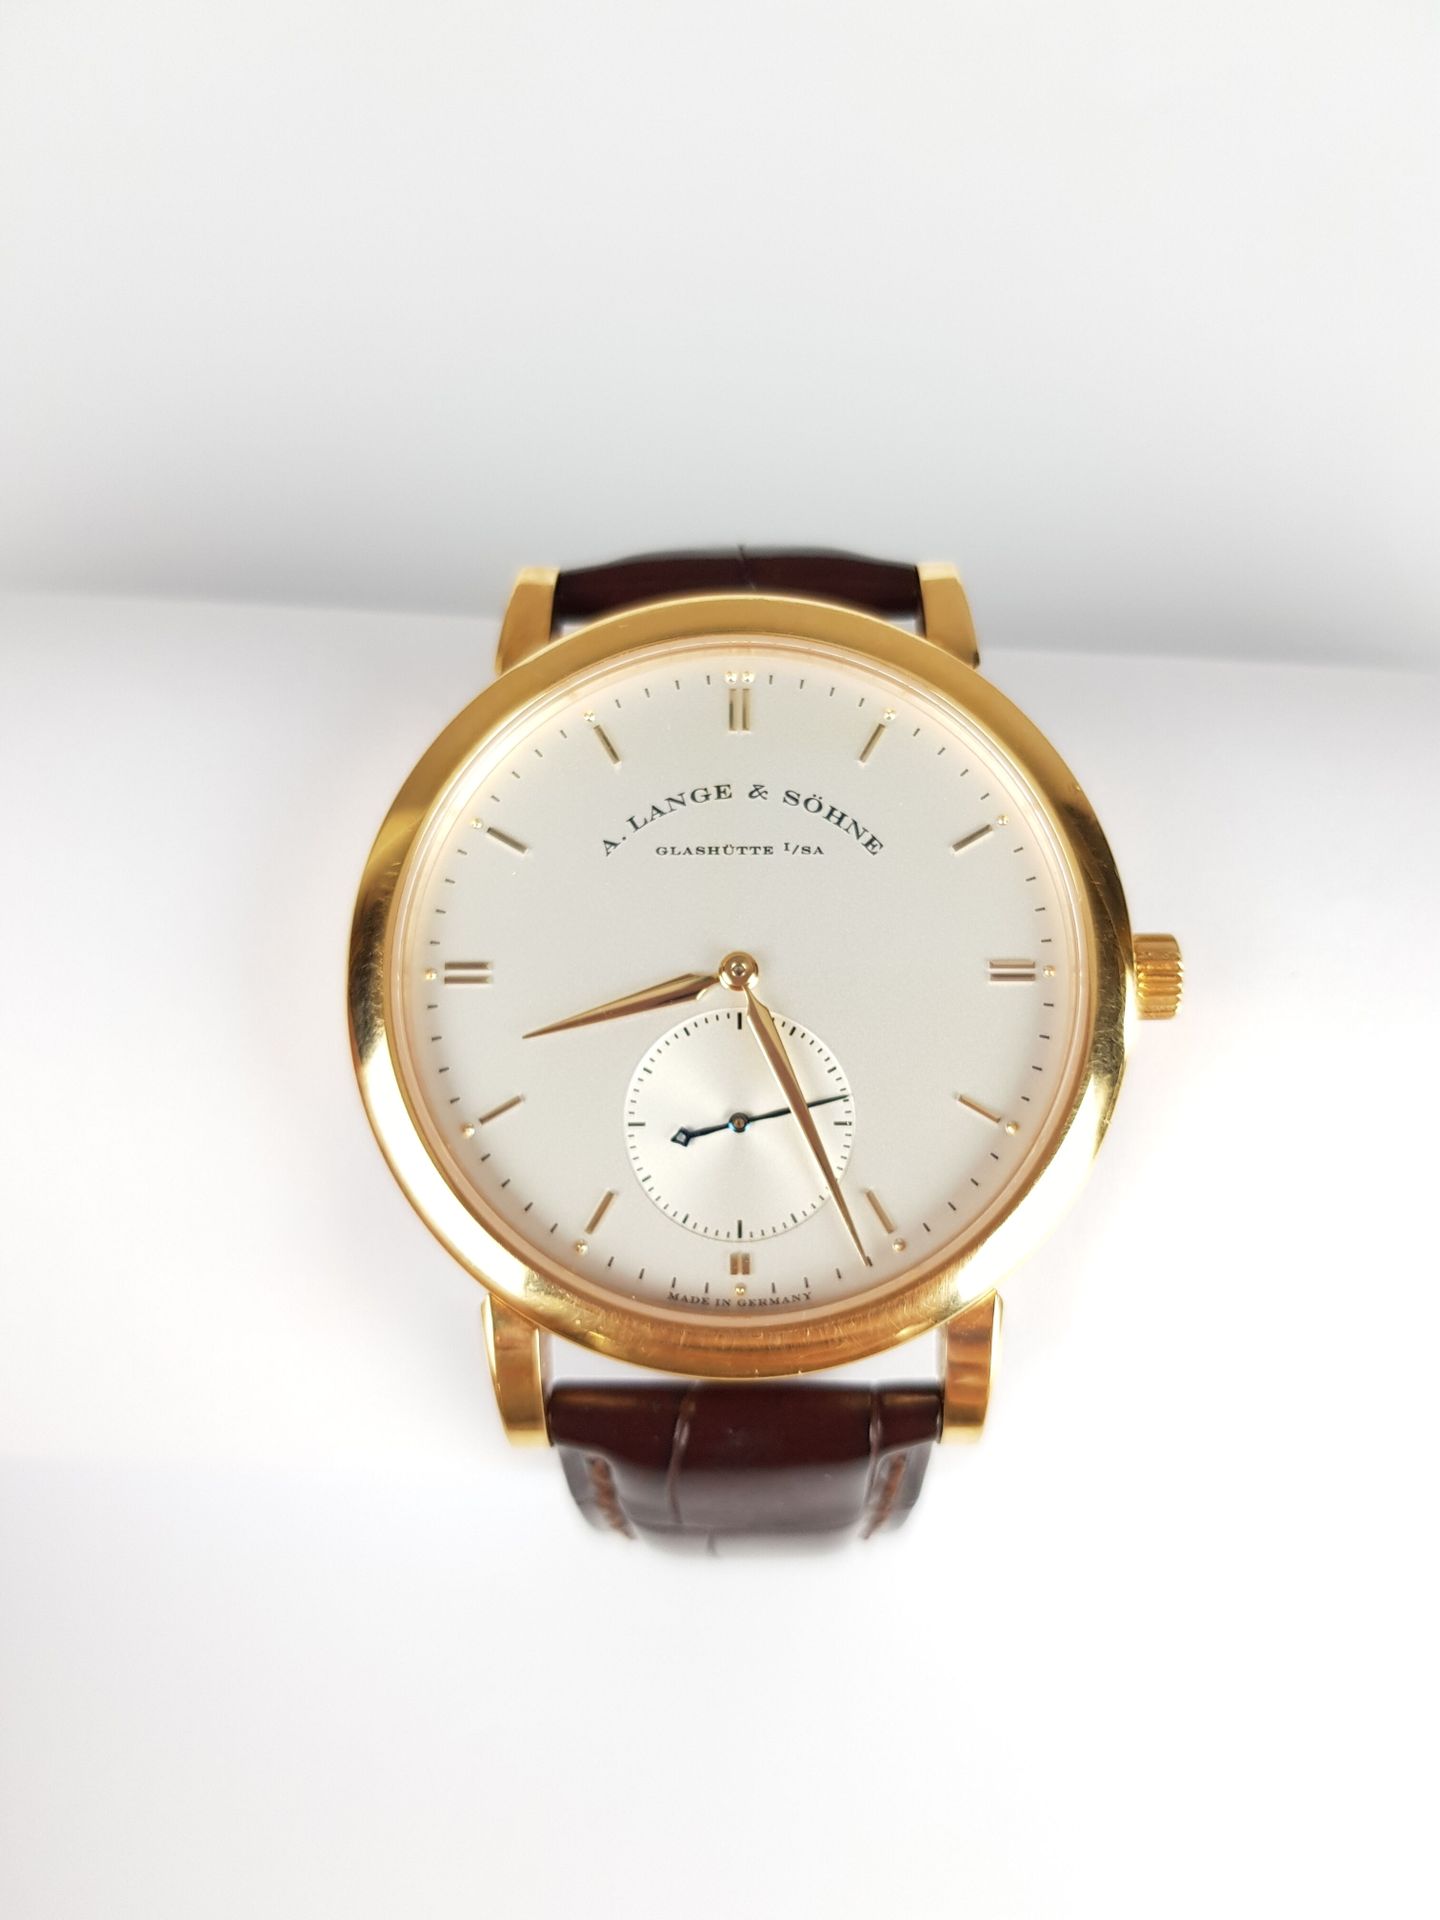 Null Precio inicial: 5.500 euros

LANGE & SÖHNE

Gran Saxonia Automatik

Reloj d&hellip;